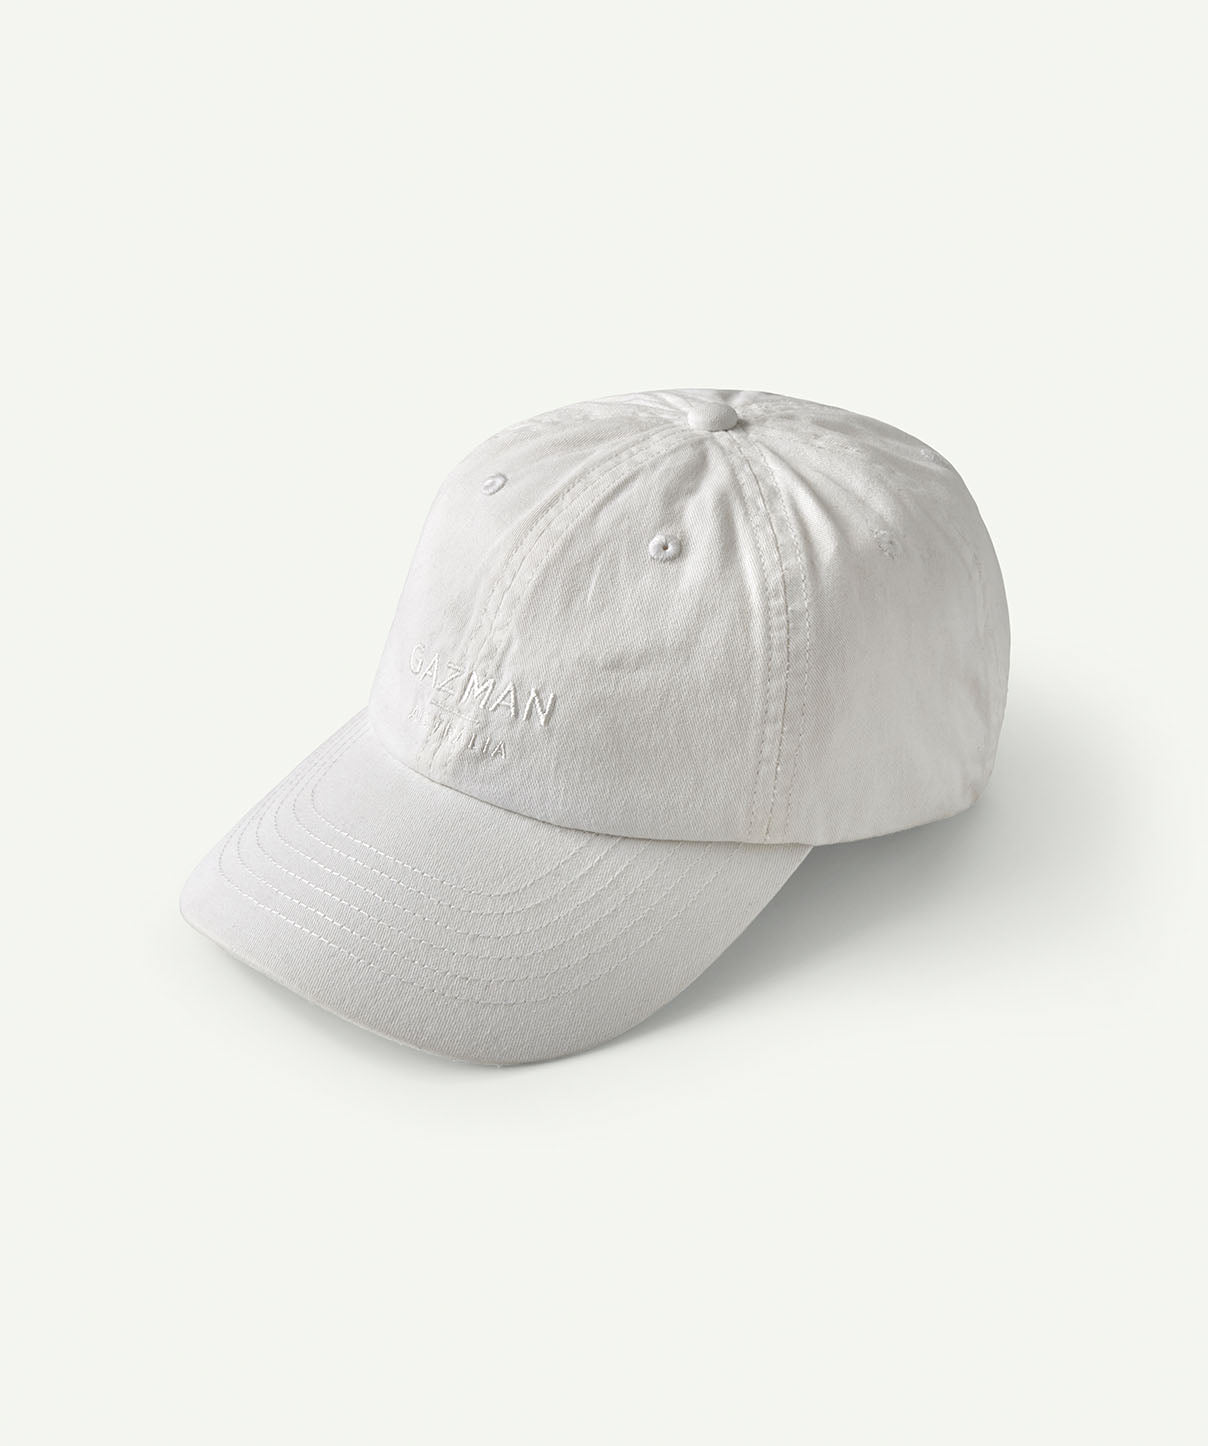 GAZMAN Cap - White - Headwear - GAZMAN